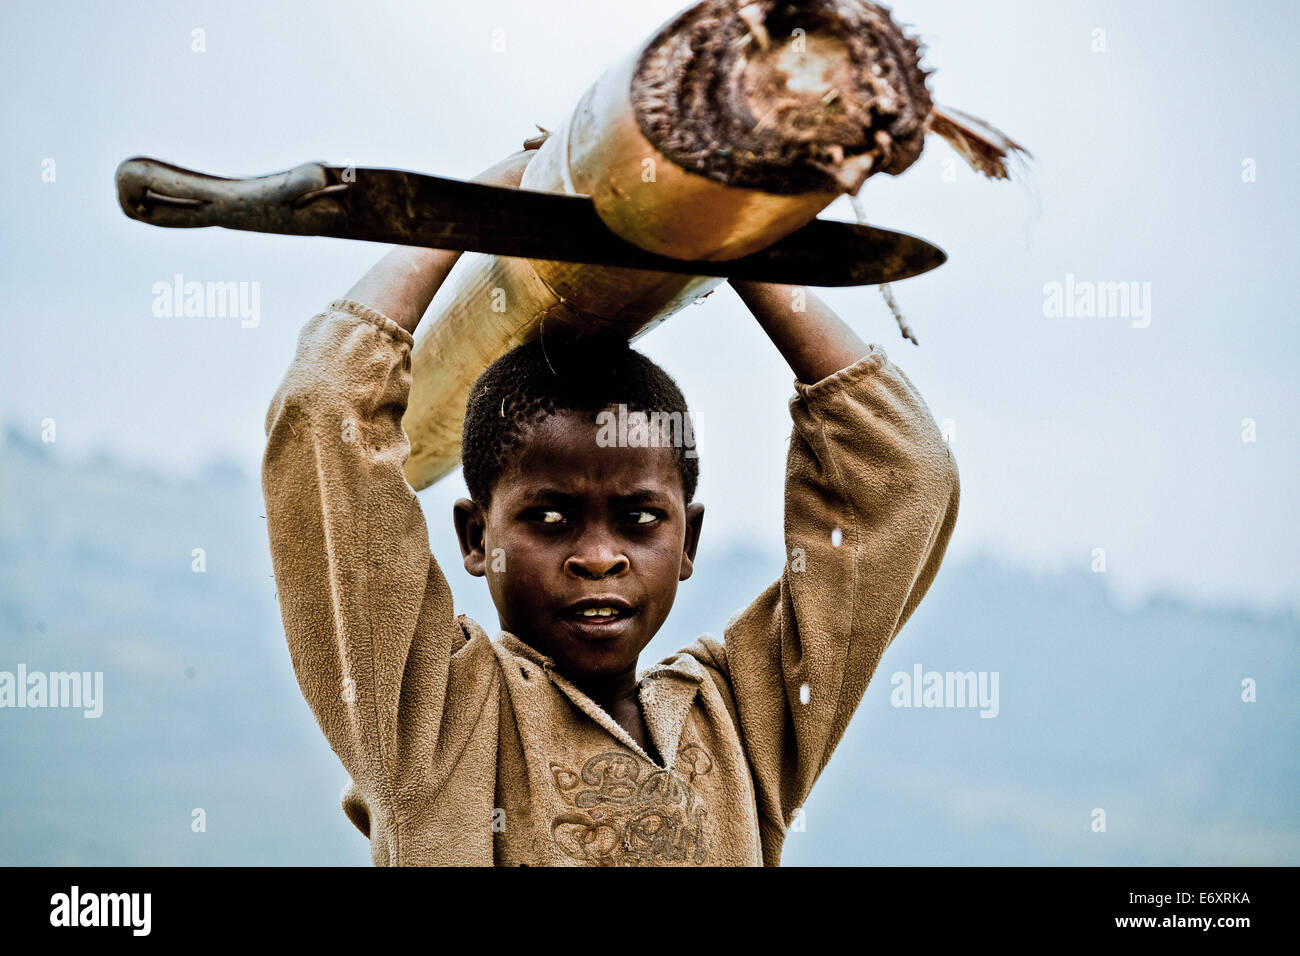 Boy carrying a banana tree and machete, Lake Buyonyi, Uganda, Africa Stock Photo